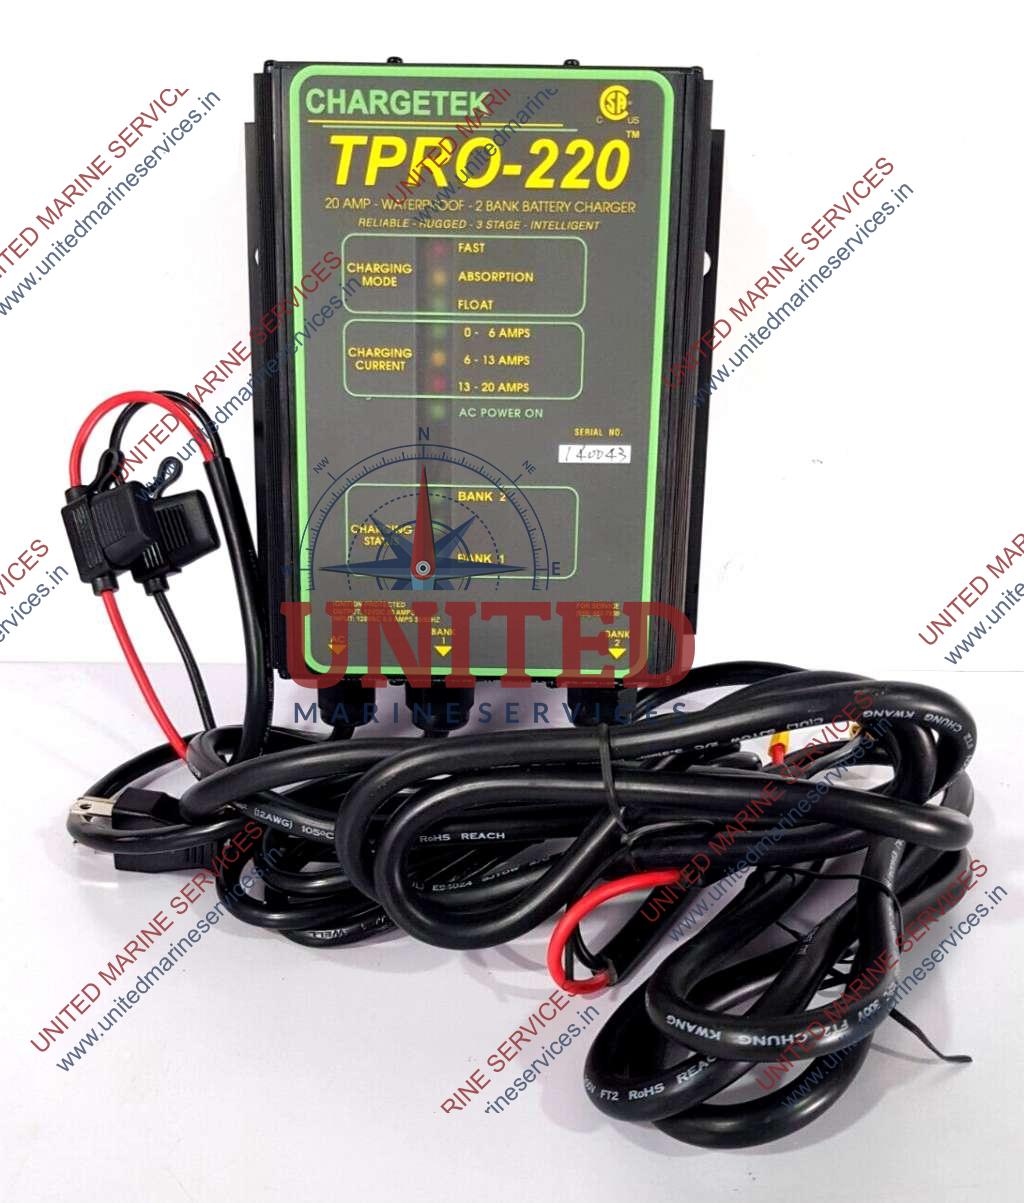 https://unitedmarineservices.in/prd/images/cVj/chargetek-tpro-220-20-amp-waterproof-2bank-battery-charger-tpro220.jpg